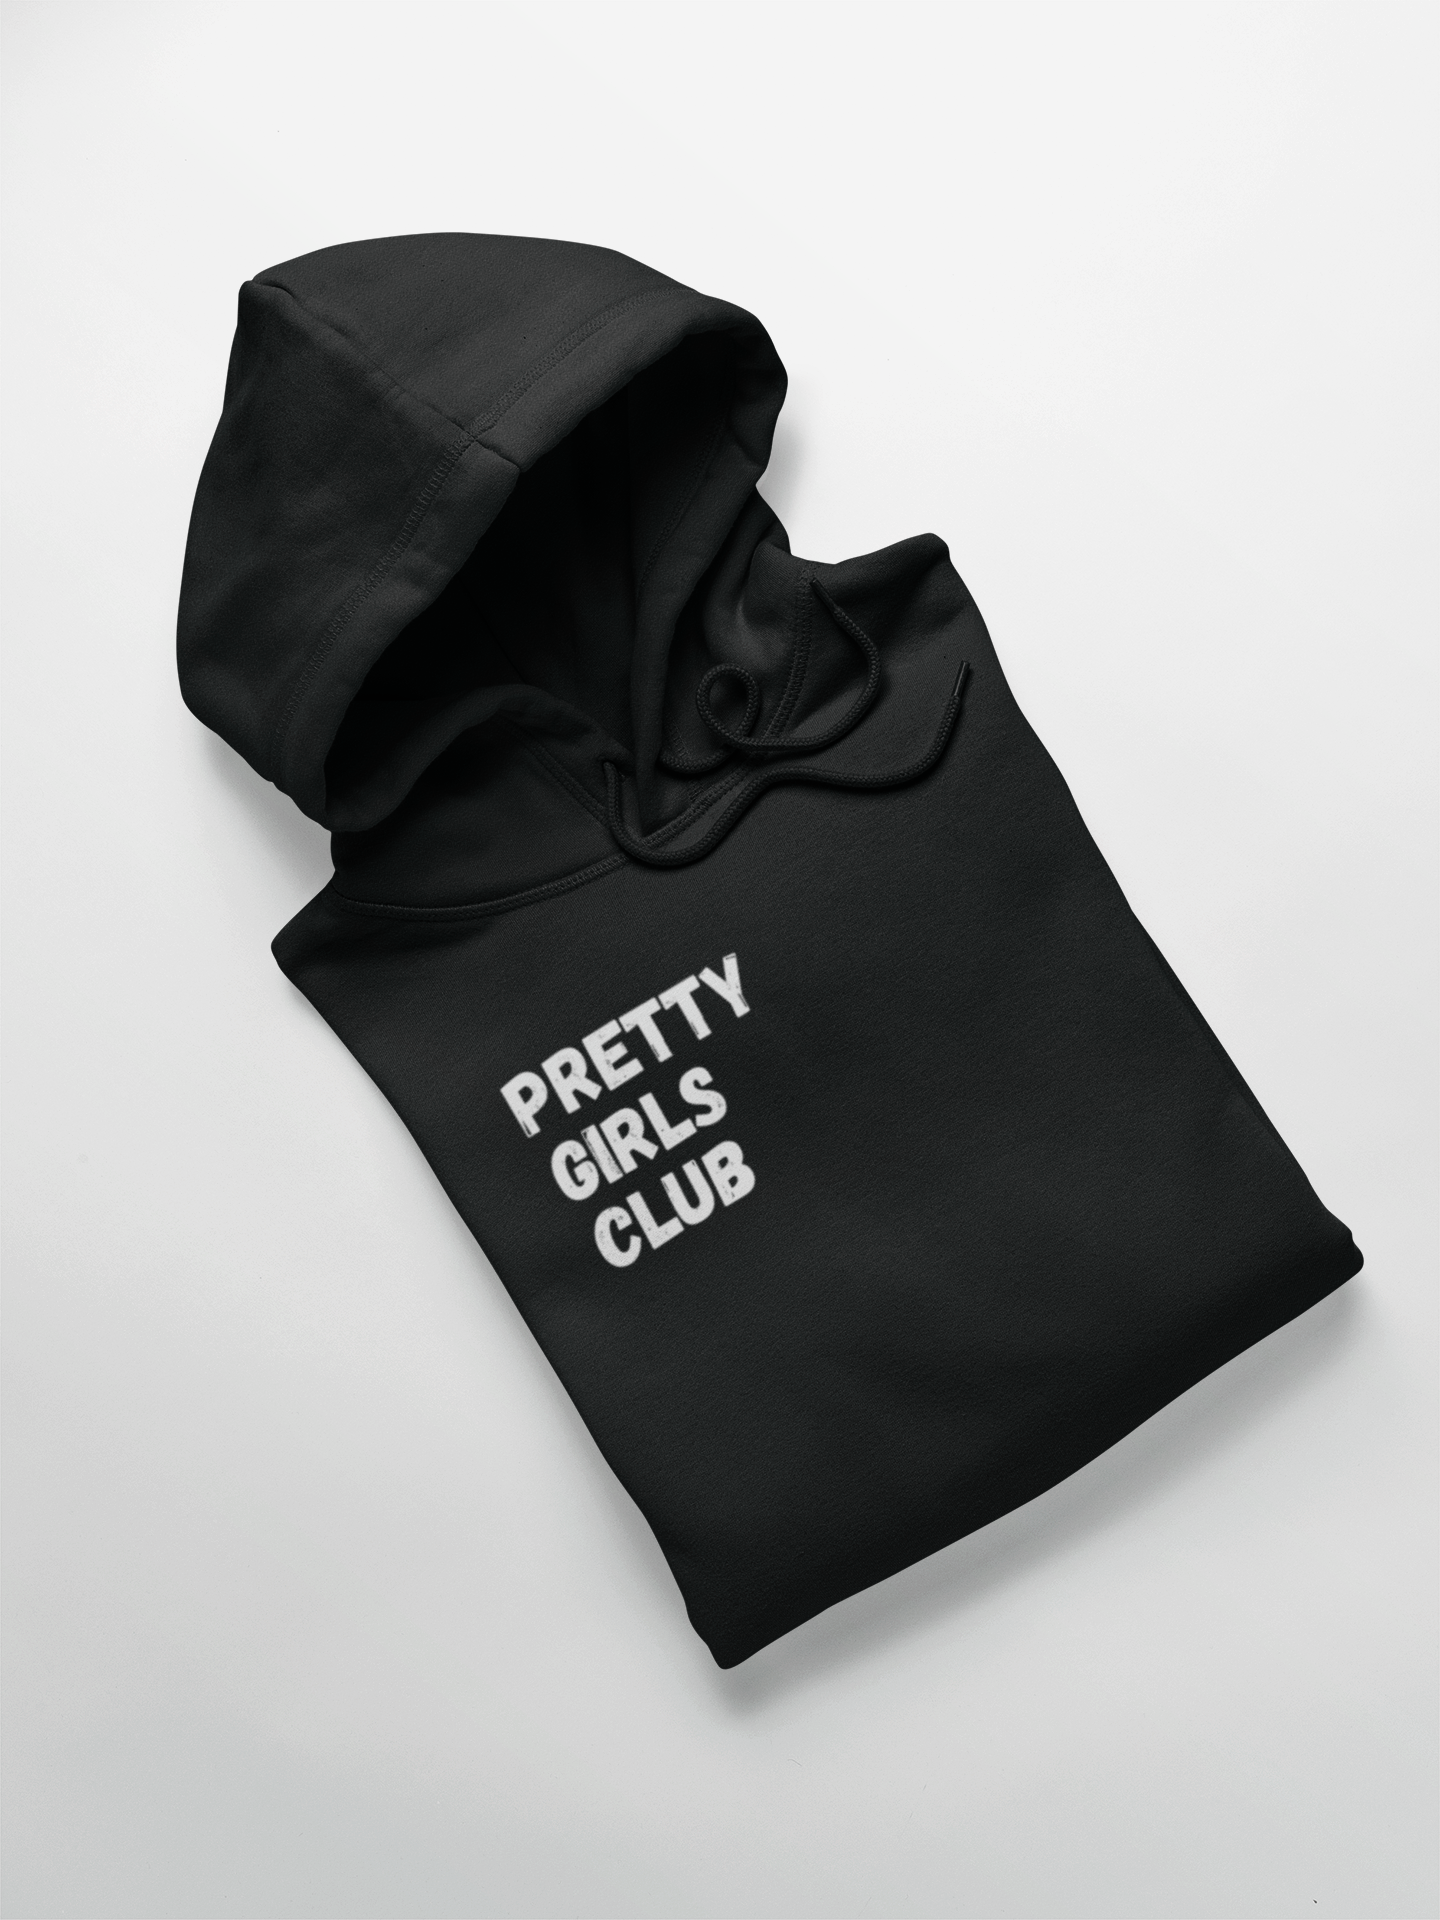 Pretty Girls Club Hoodie